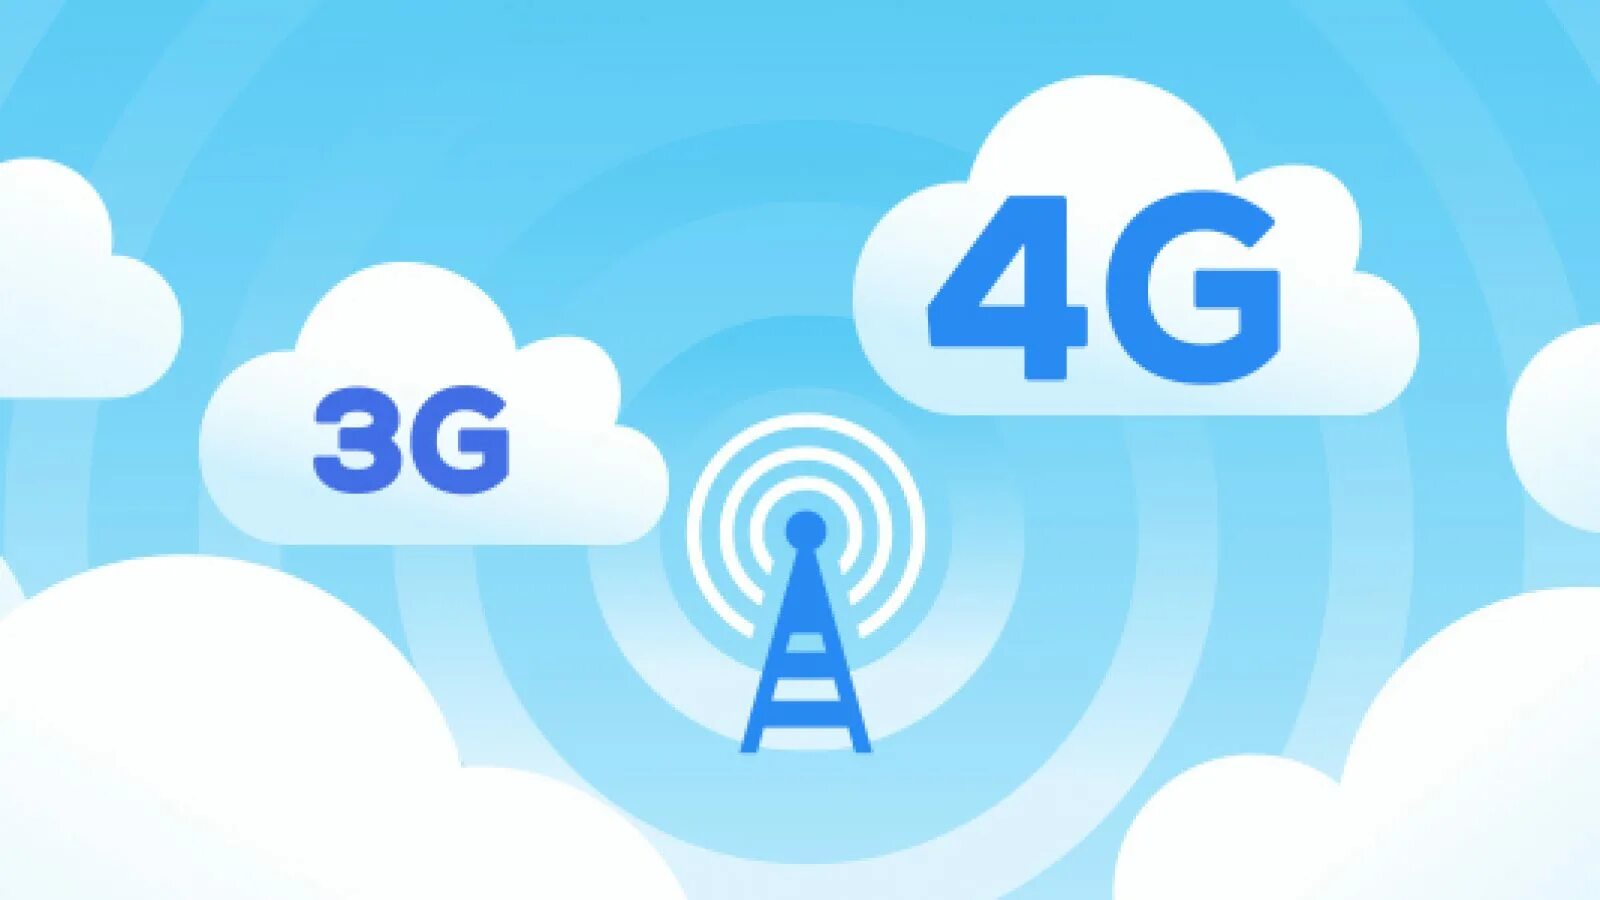 3g 4g. 3g интернет. Мобильный интернет 4g. Значок 3g.